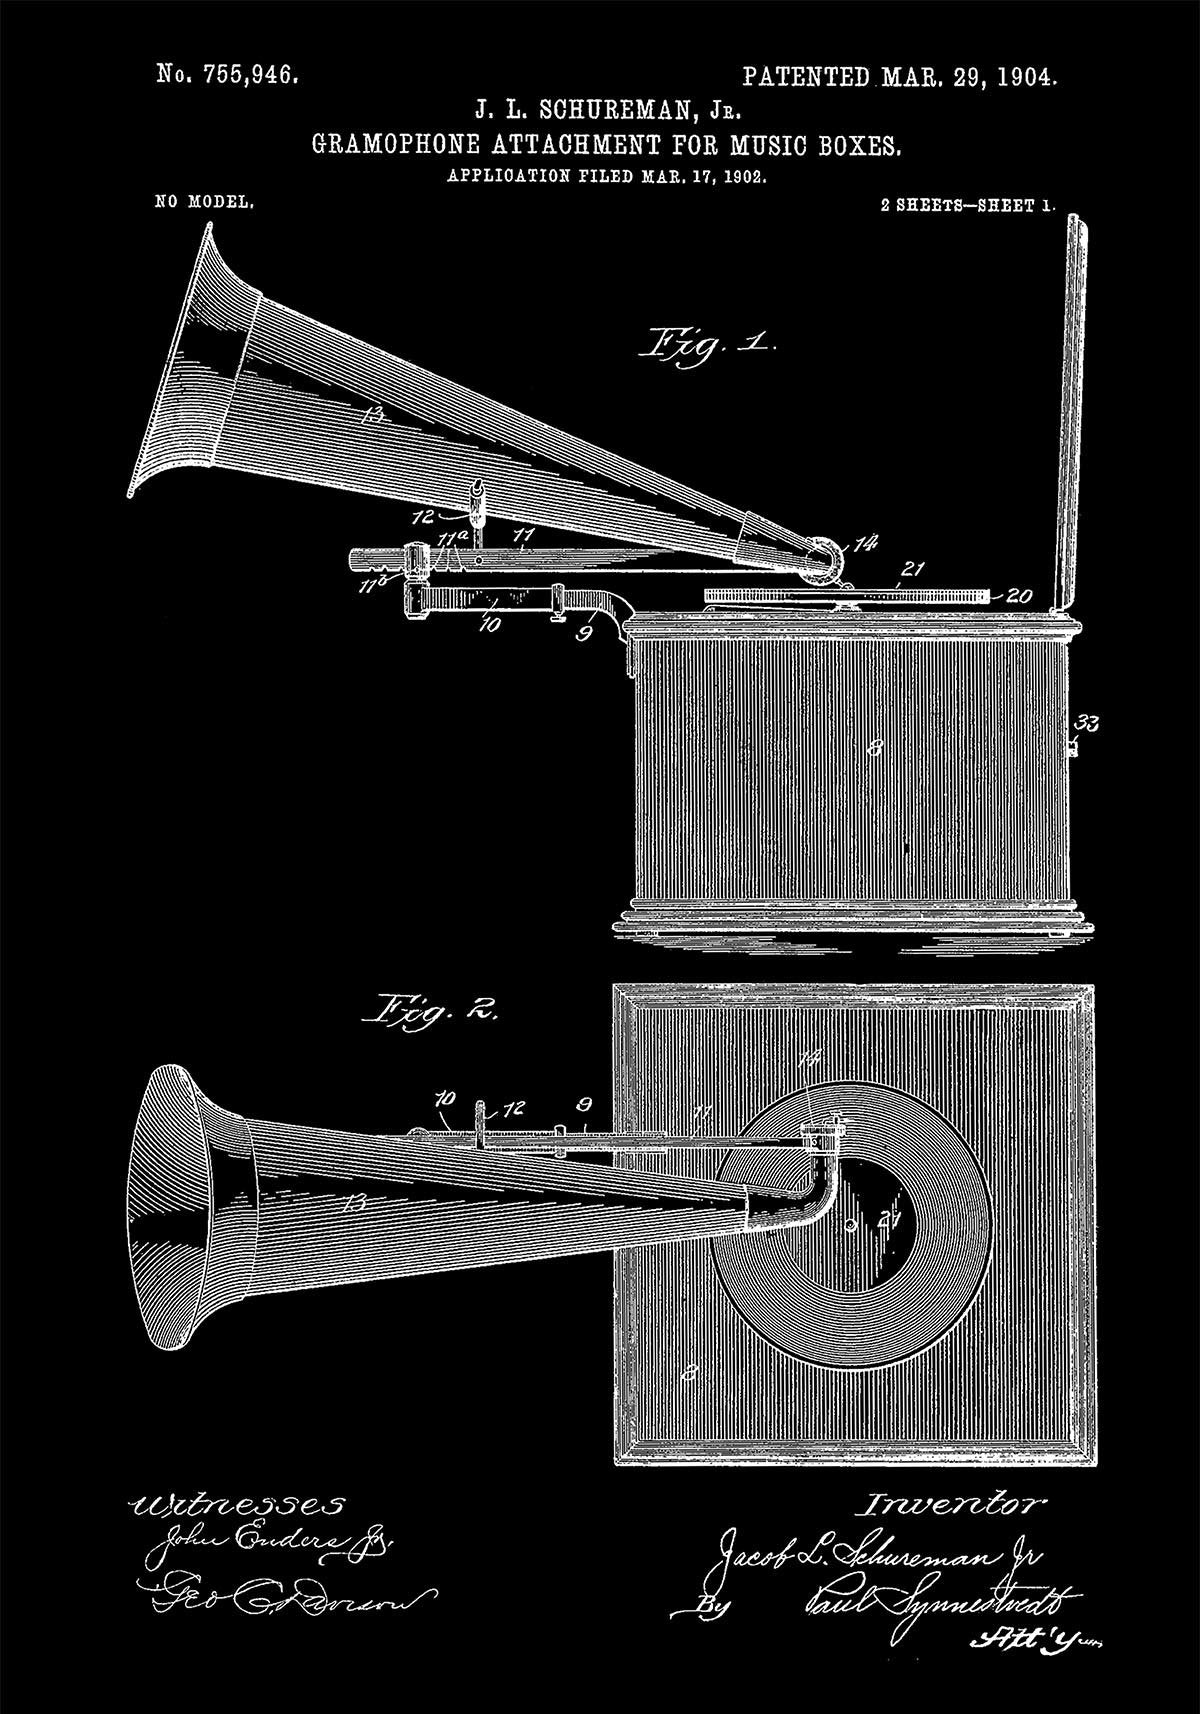 Gramophone Patent Poster